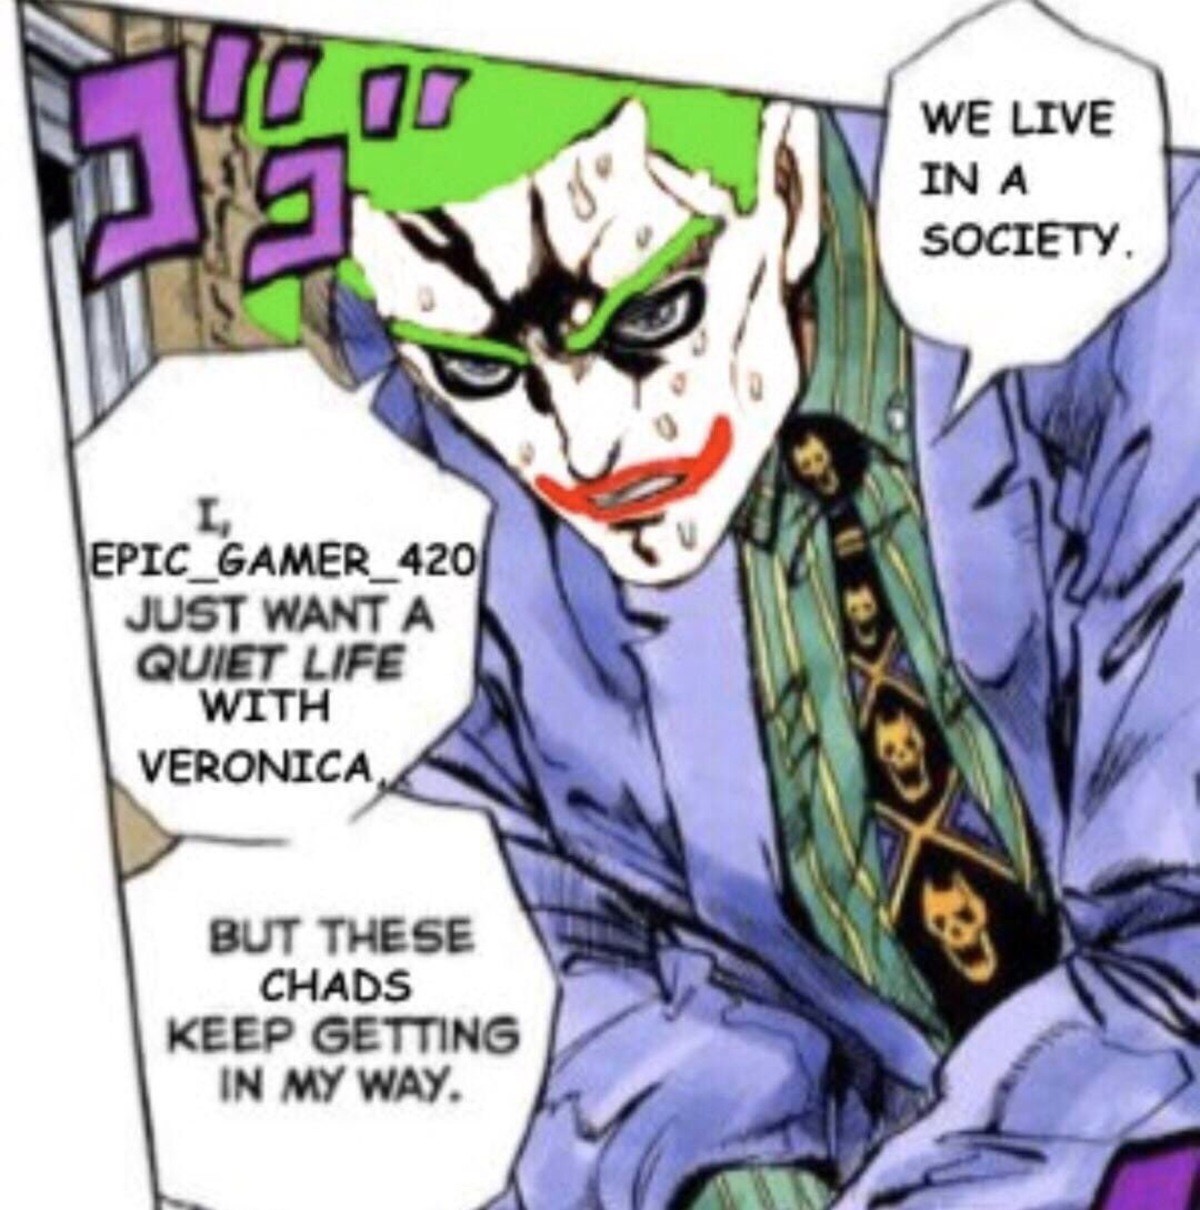 People want to live in an society. Kira Yoshikage Chad. Kira Yoshikage memes Joker.